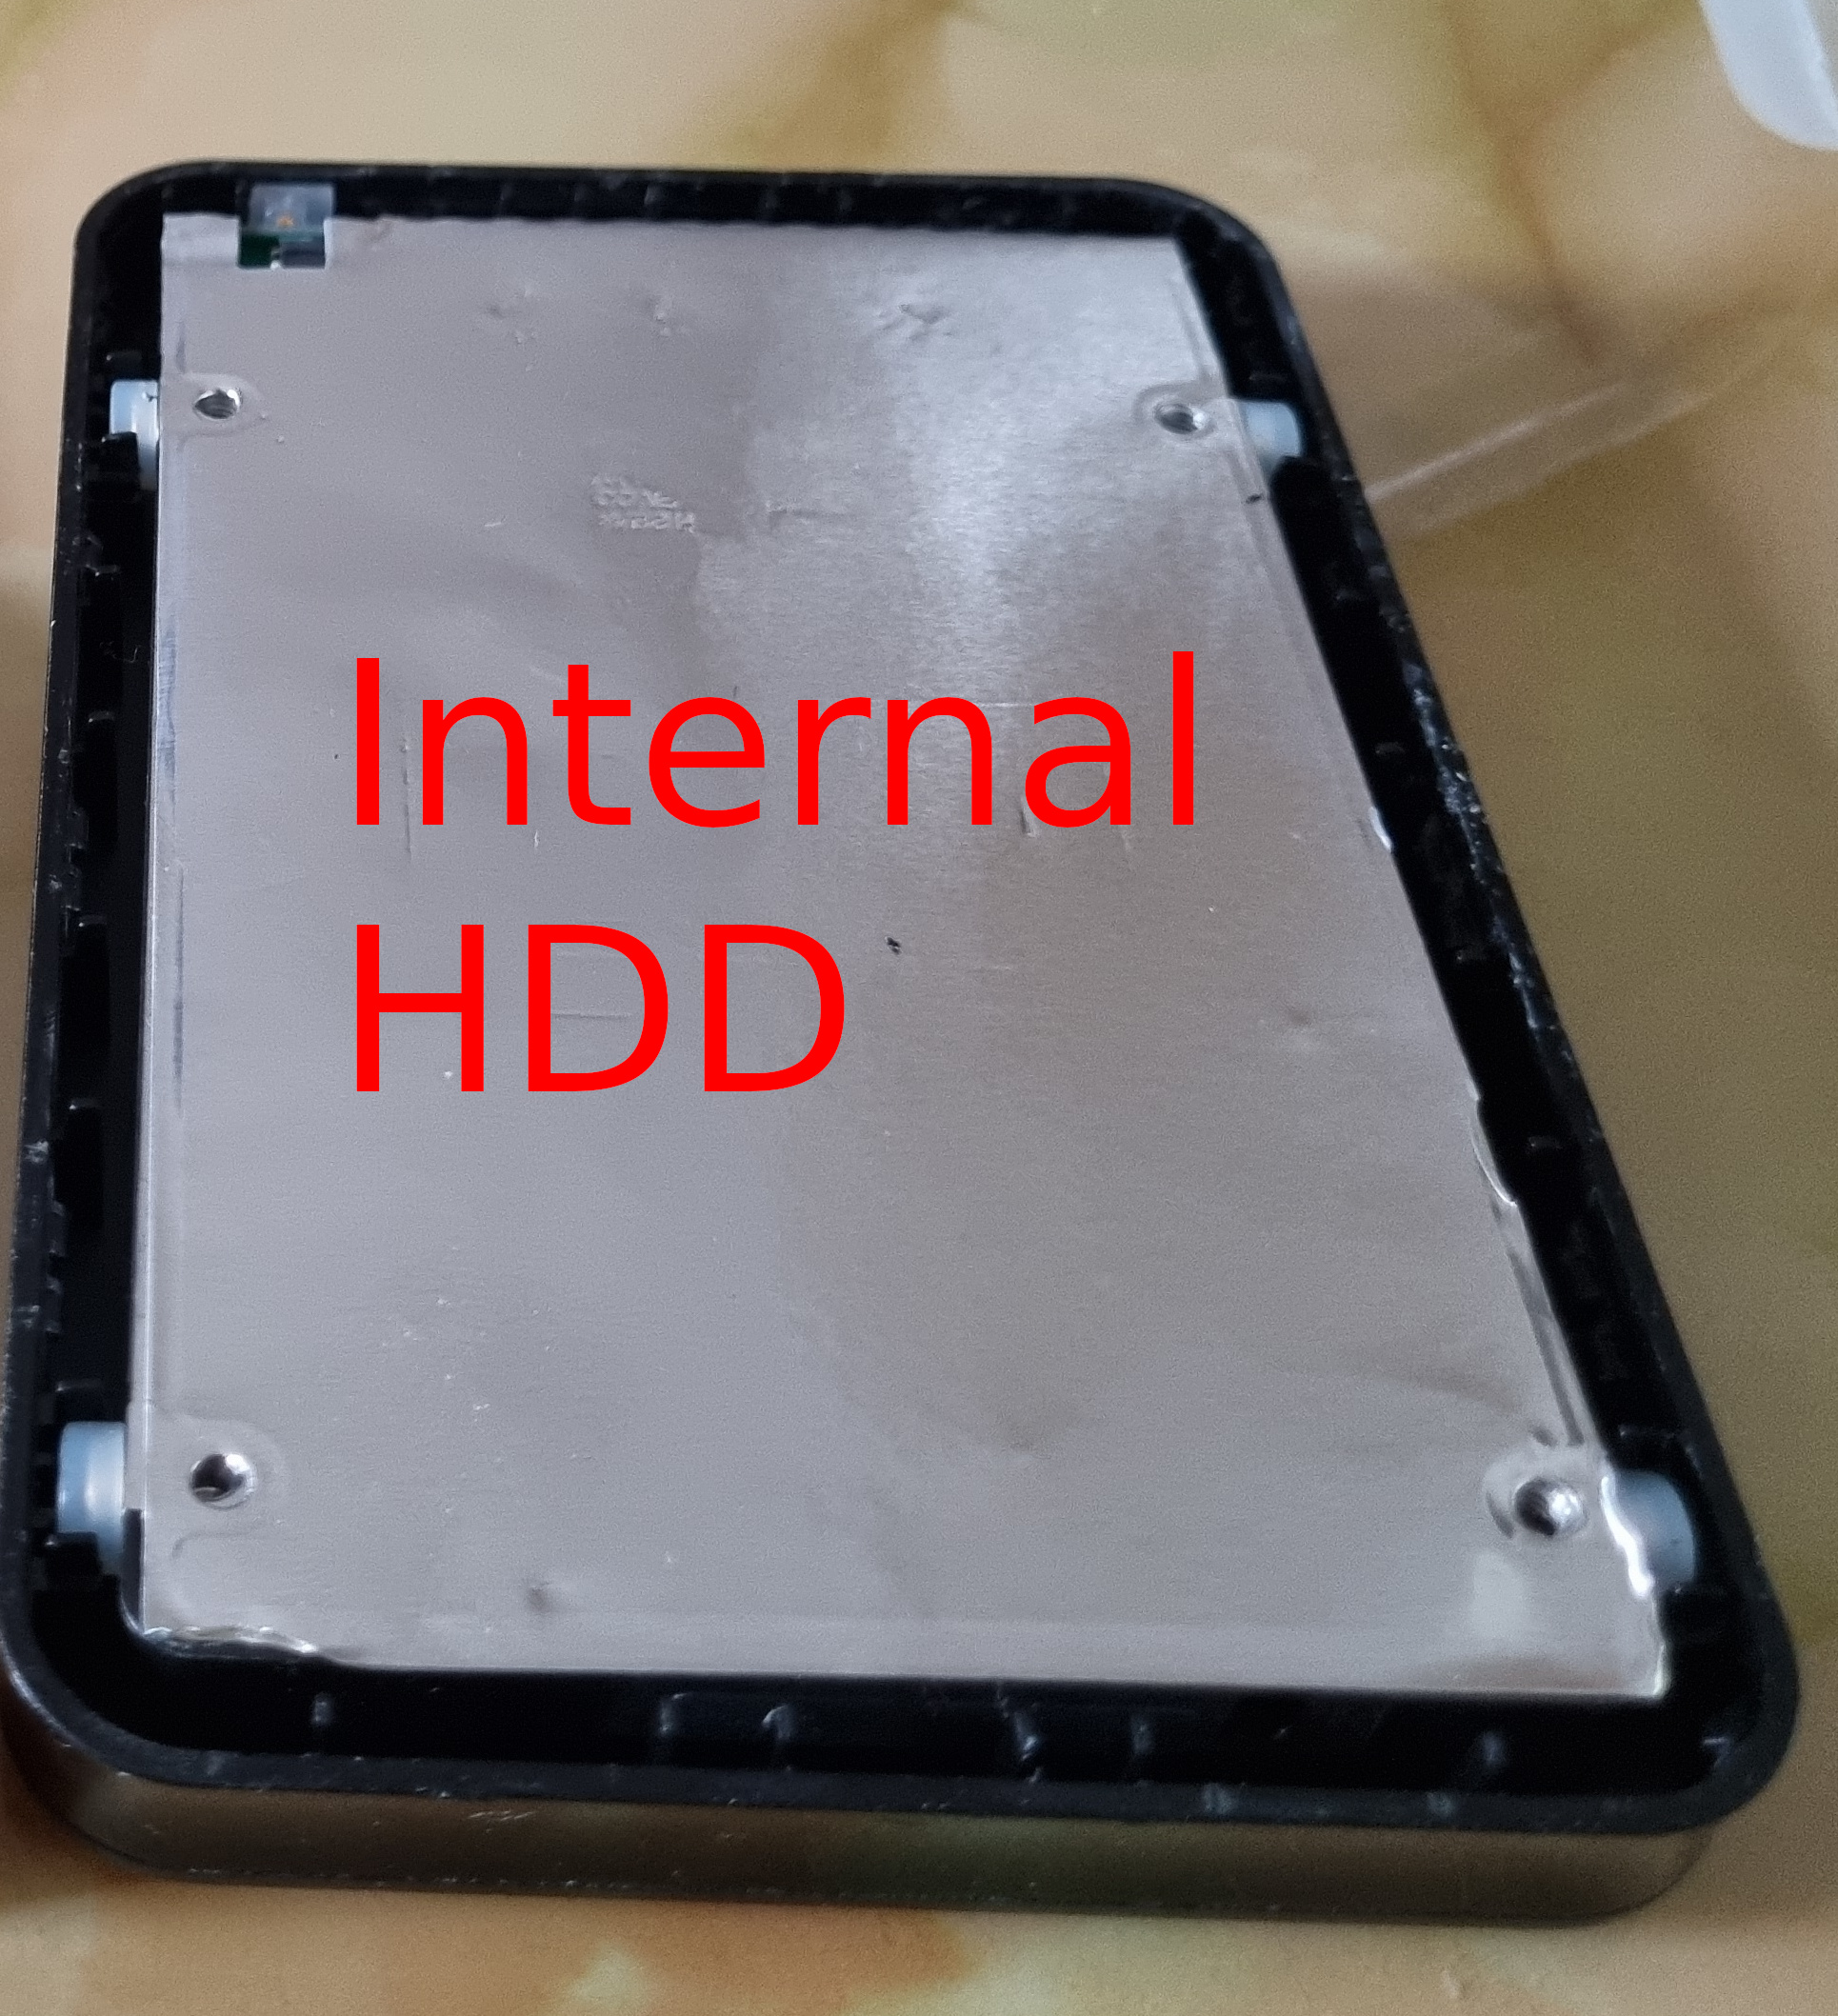 Internal HDD photo